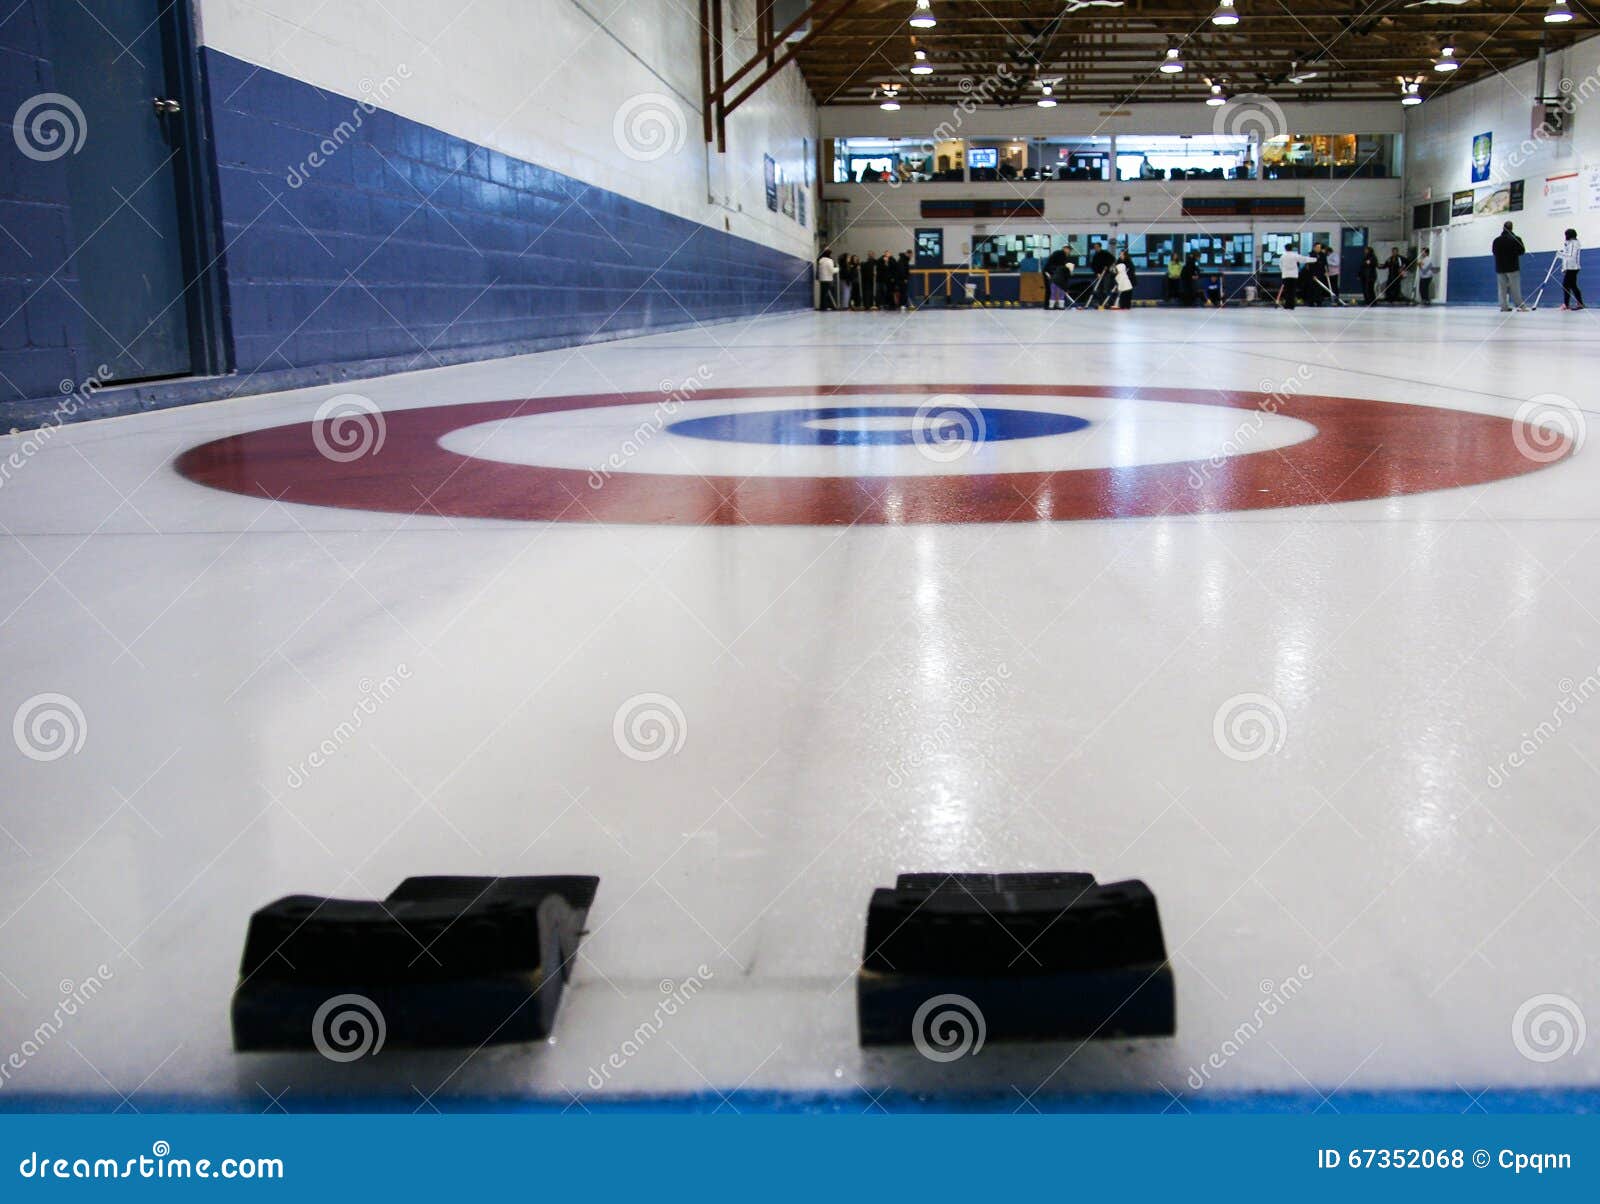 Curling field stock photo